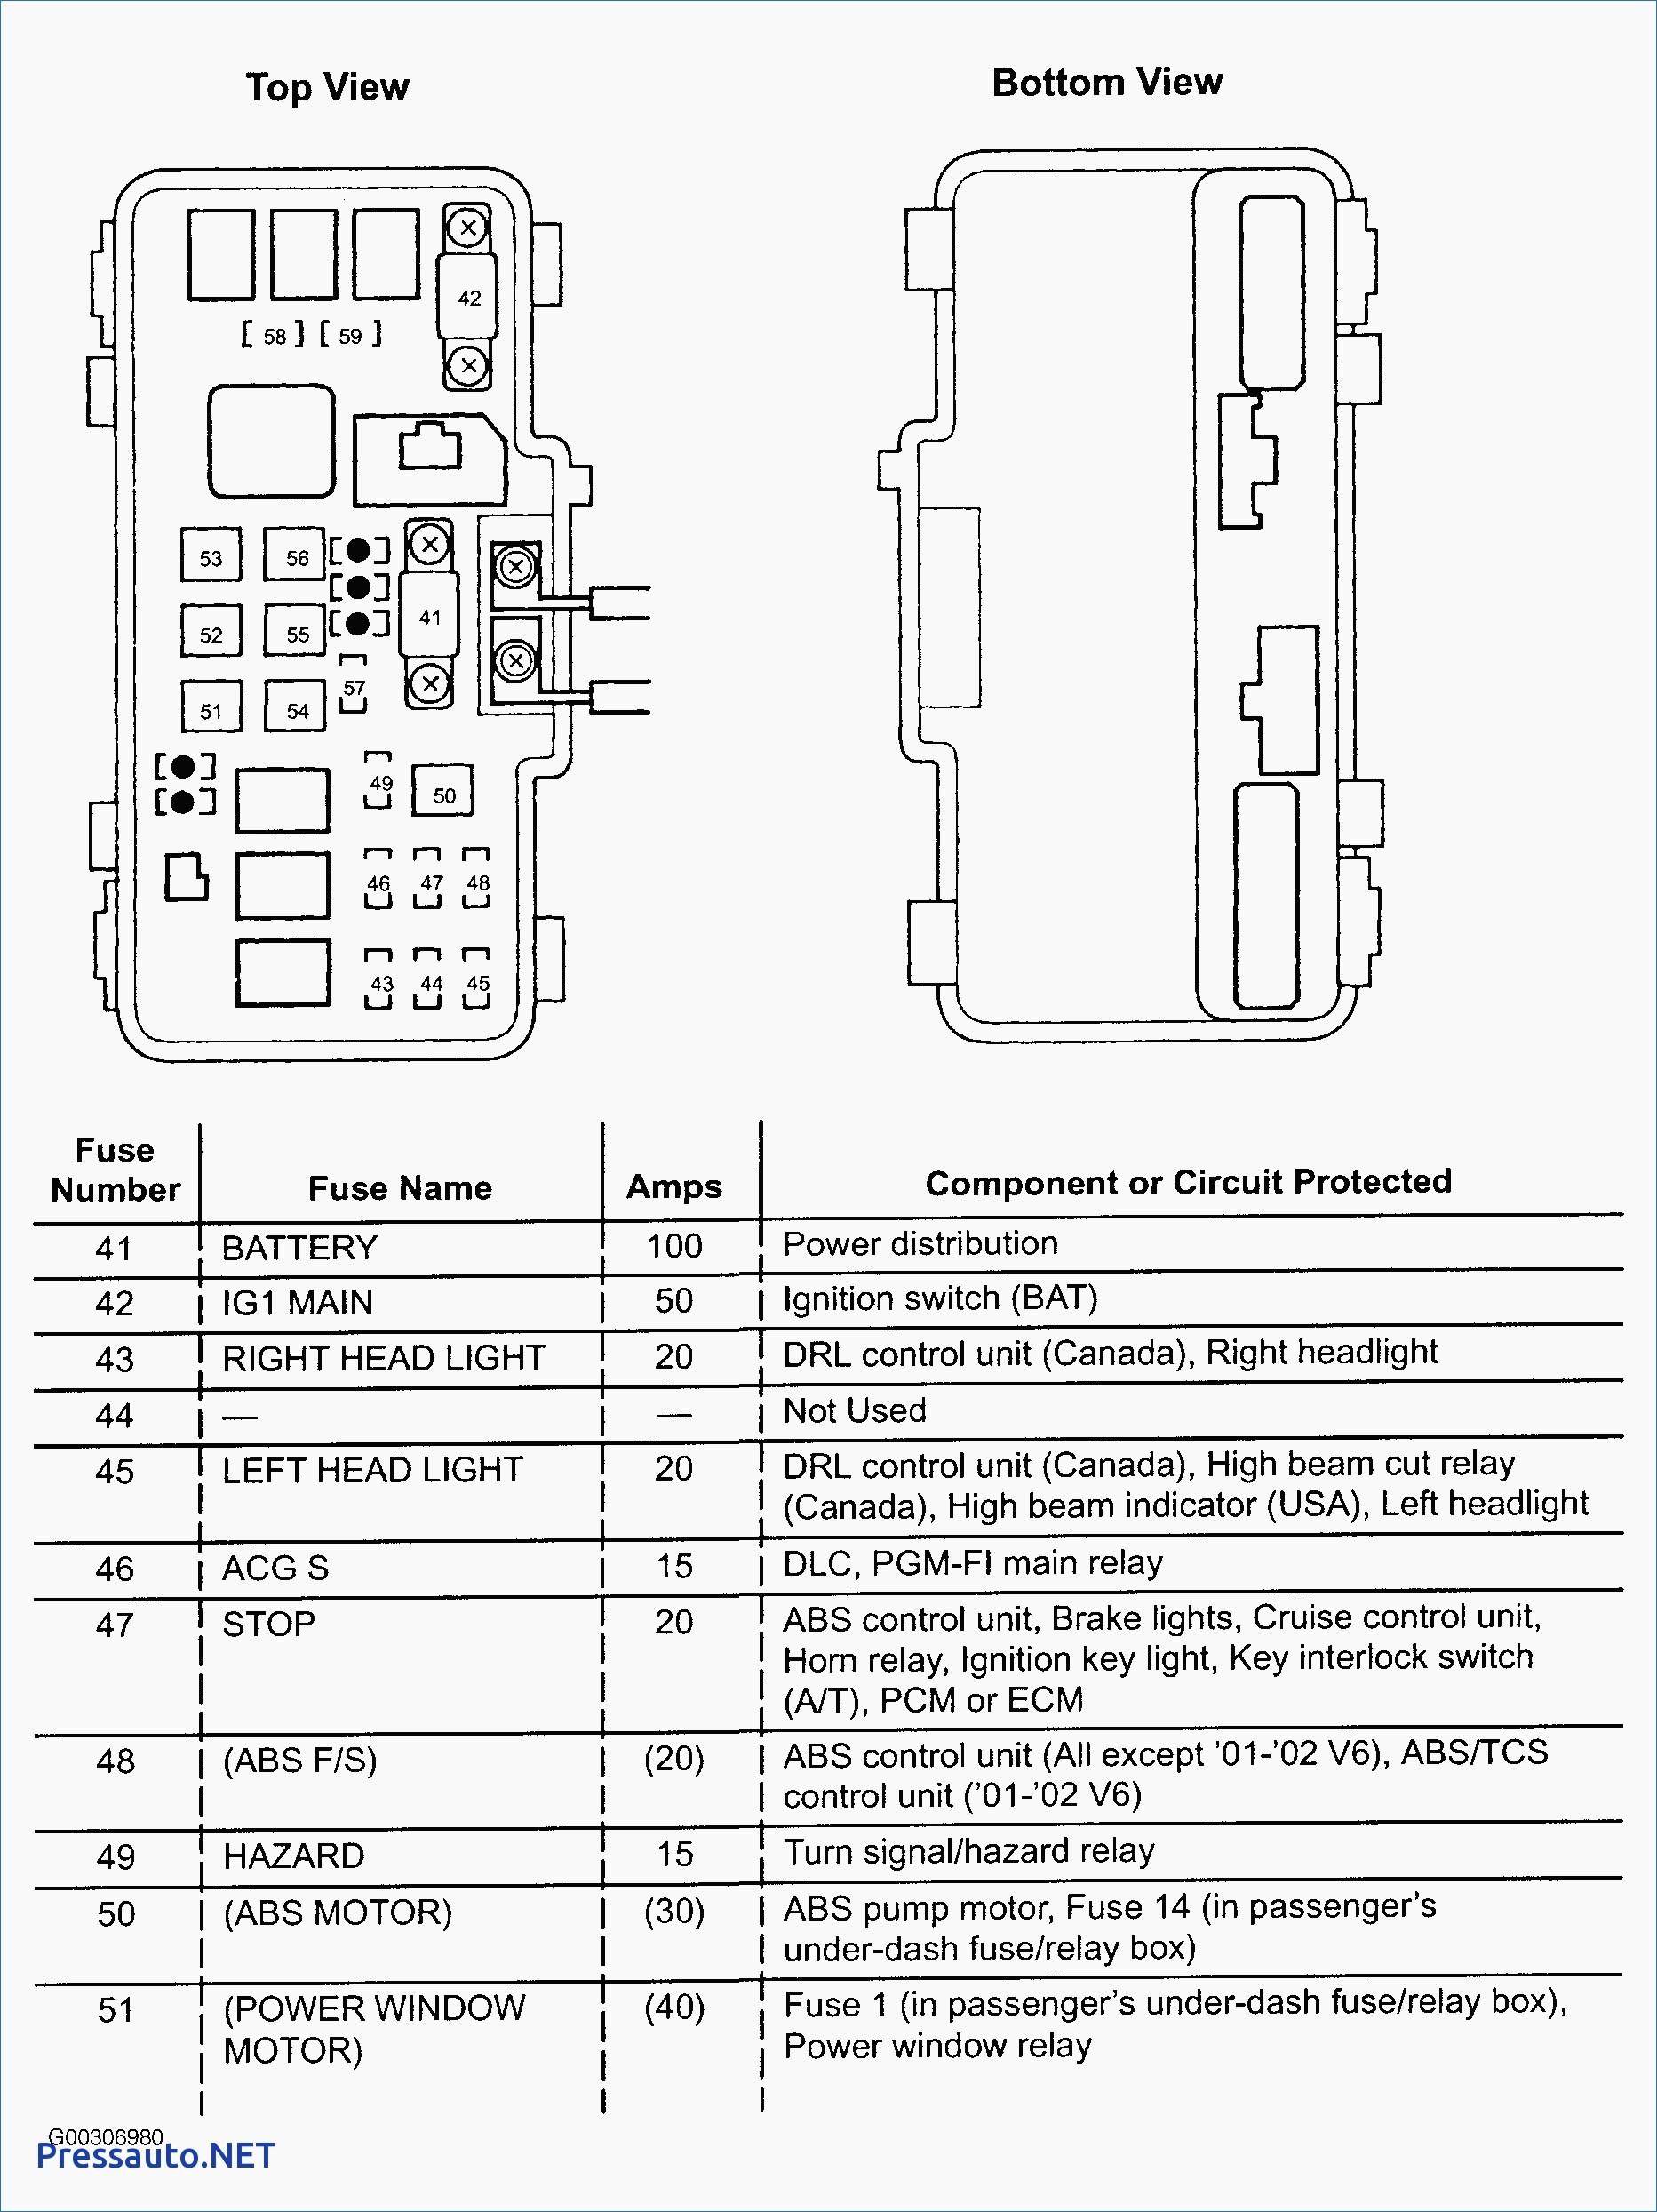 Honda Accord 1994 Engine Diagram Best 2002 Honda Accord Wiring Diagram Gallery Everything You Need